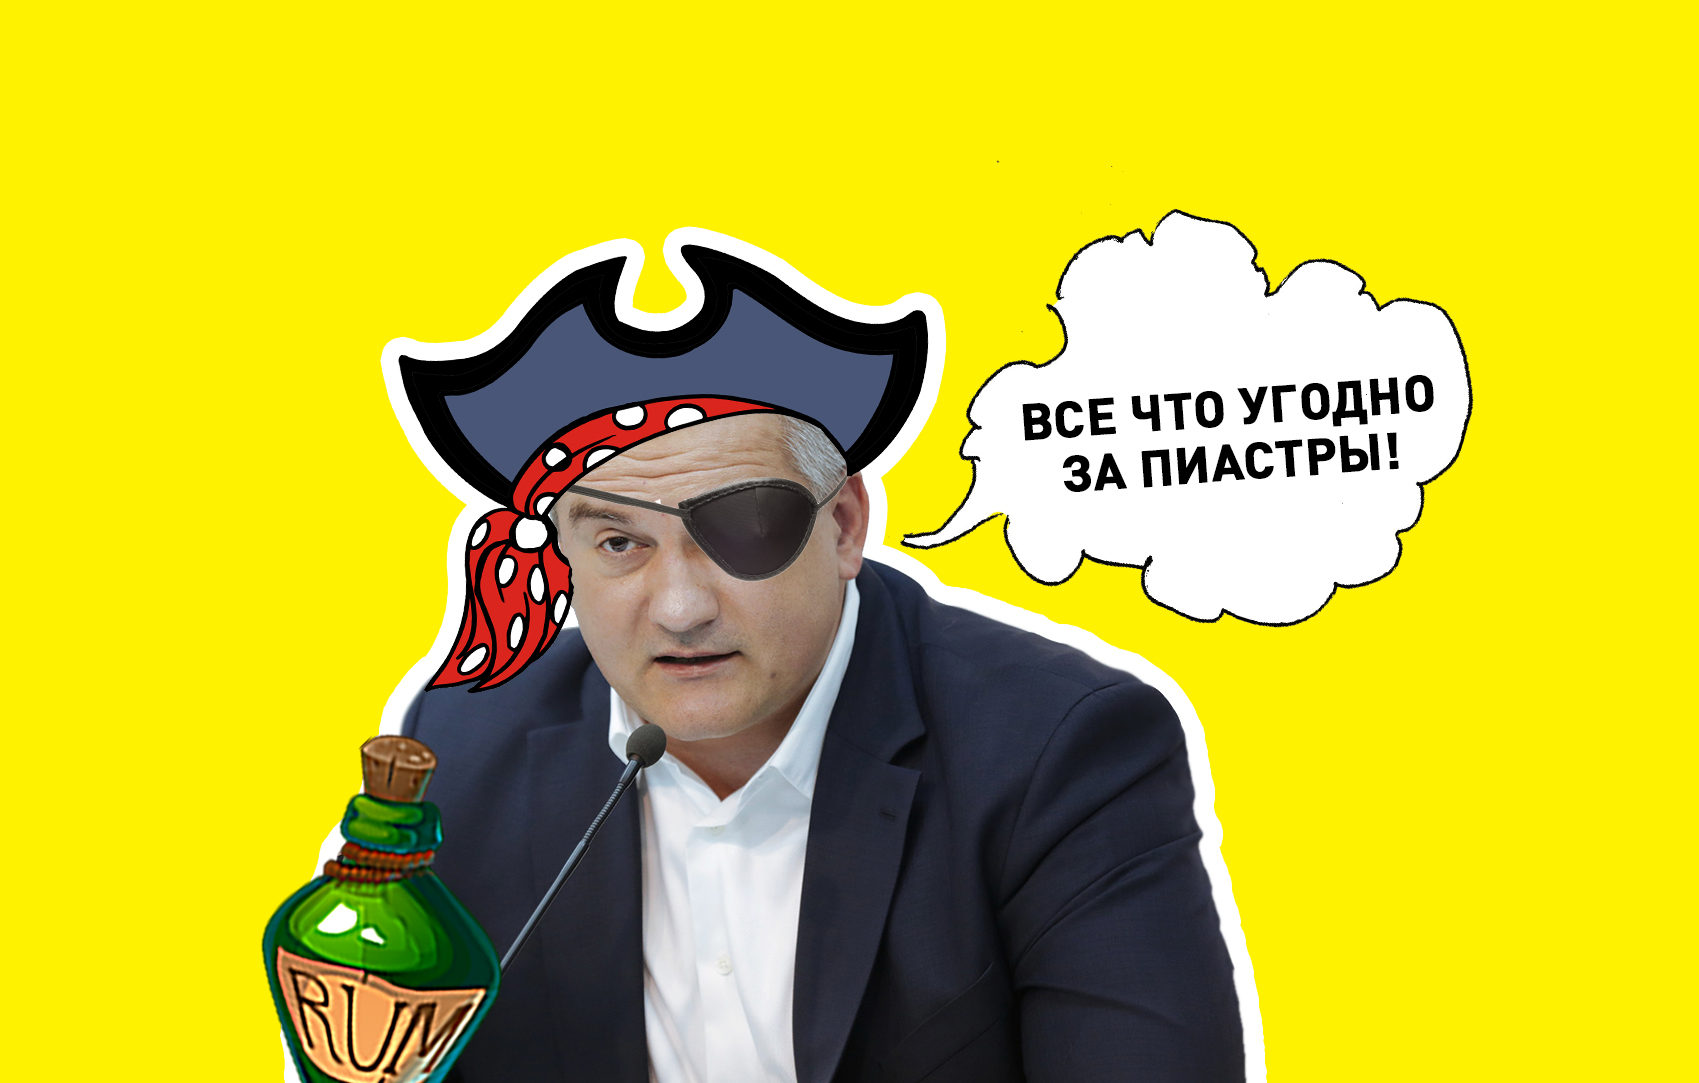 Кто он, если не пират: Портников разъяснил заявление Аксенова